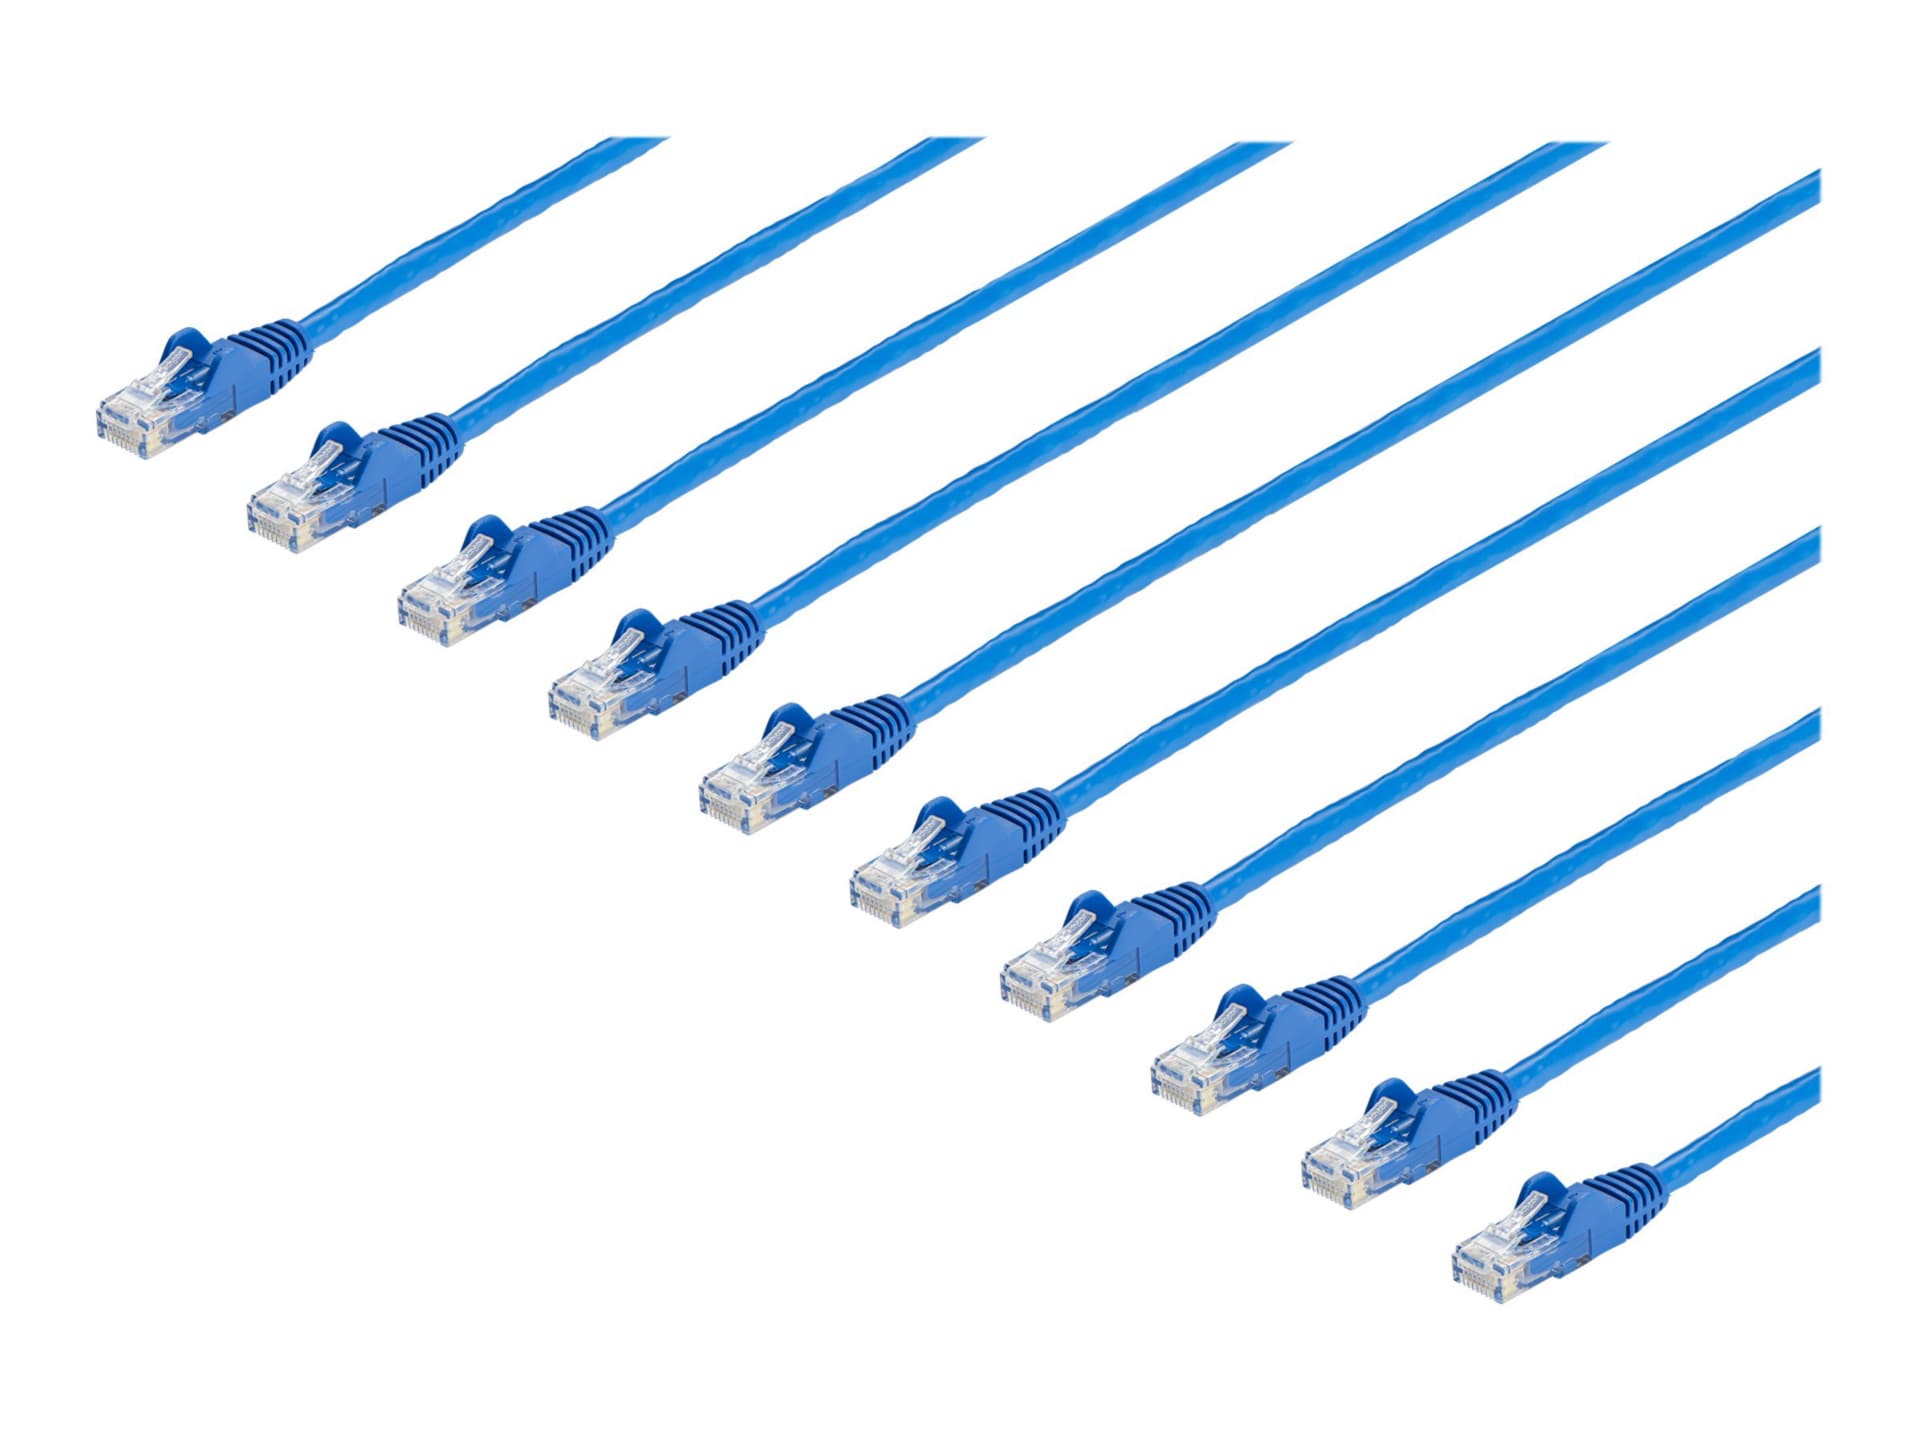 StarTech.com 25' CAT6 Ethernet Cable - 10 Pack - Blue Cord - Snagless - ETL